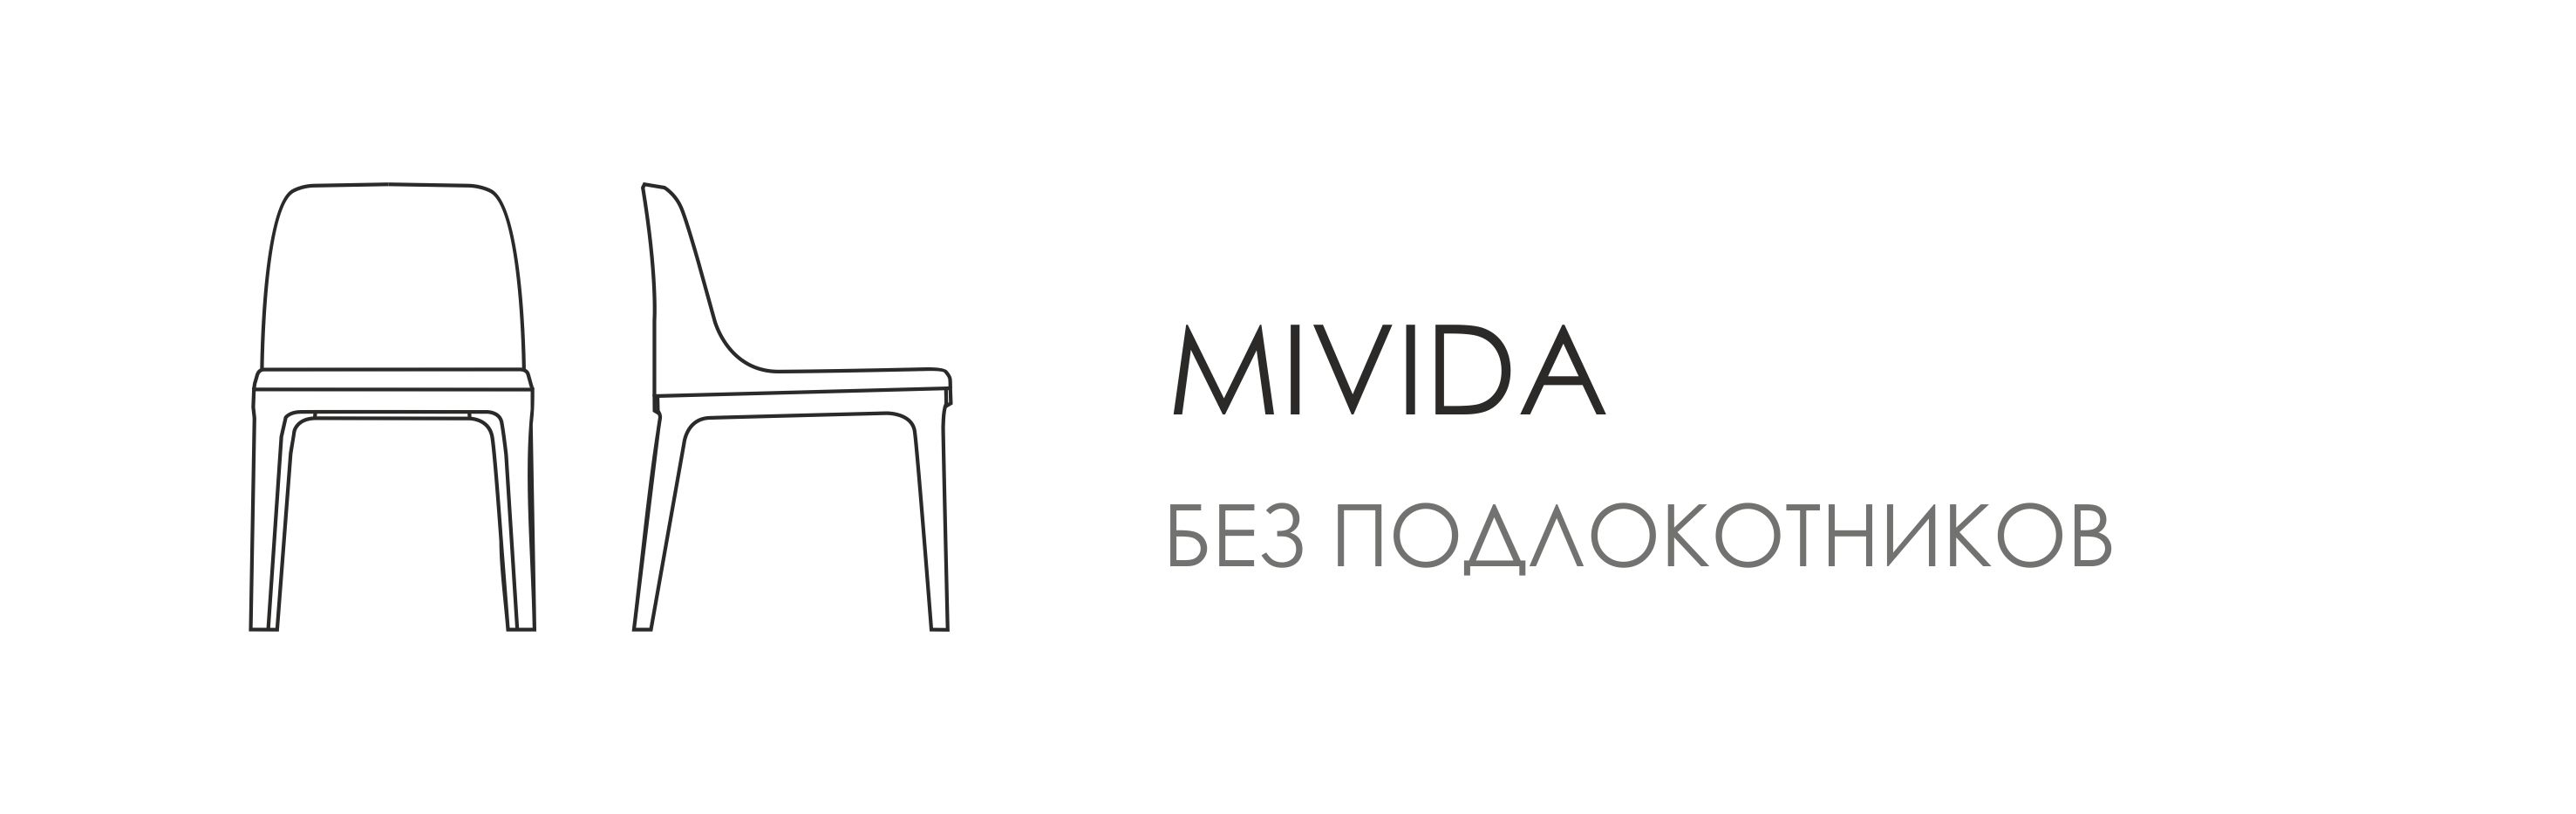 Стул - Mivida NEW без подлокотников